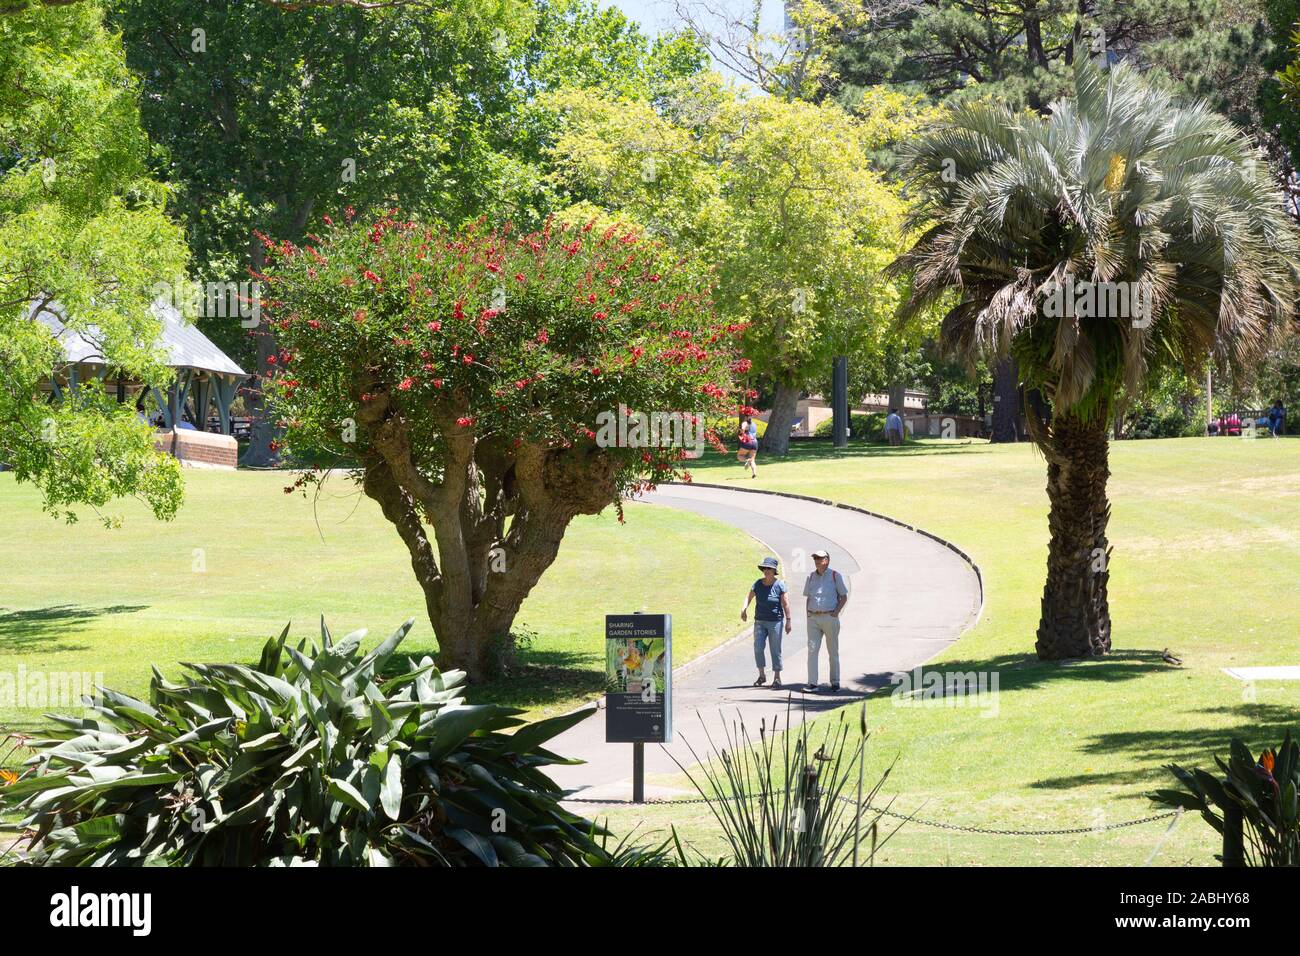 Royal Botanic Gardens Sydney Australia - people enjoying the spring sunshine in November, Sydney Australia Stock Photo